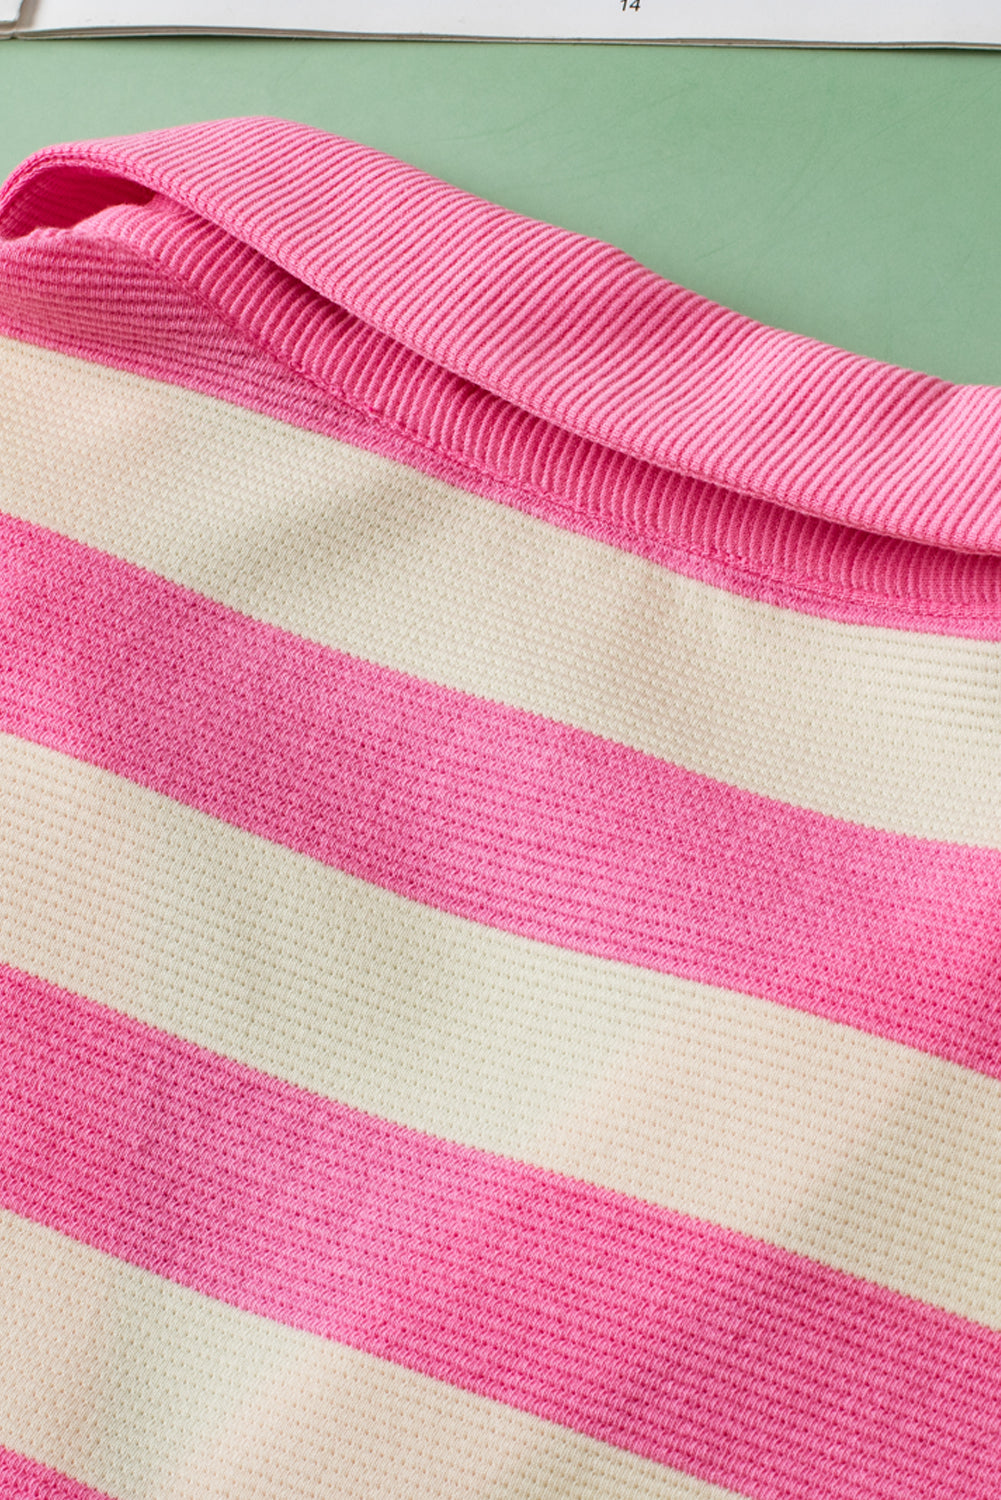 Pink Stripe V Neck Collared Cap Sleeve Top